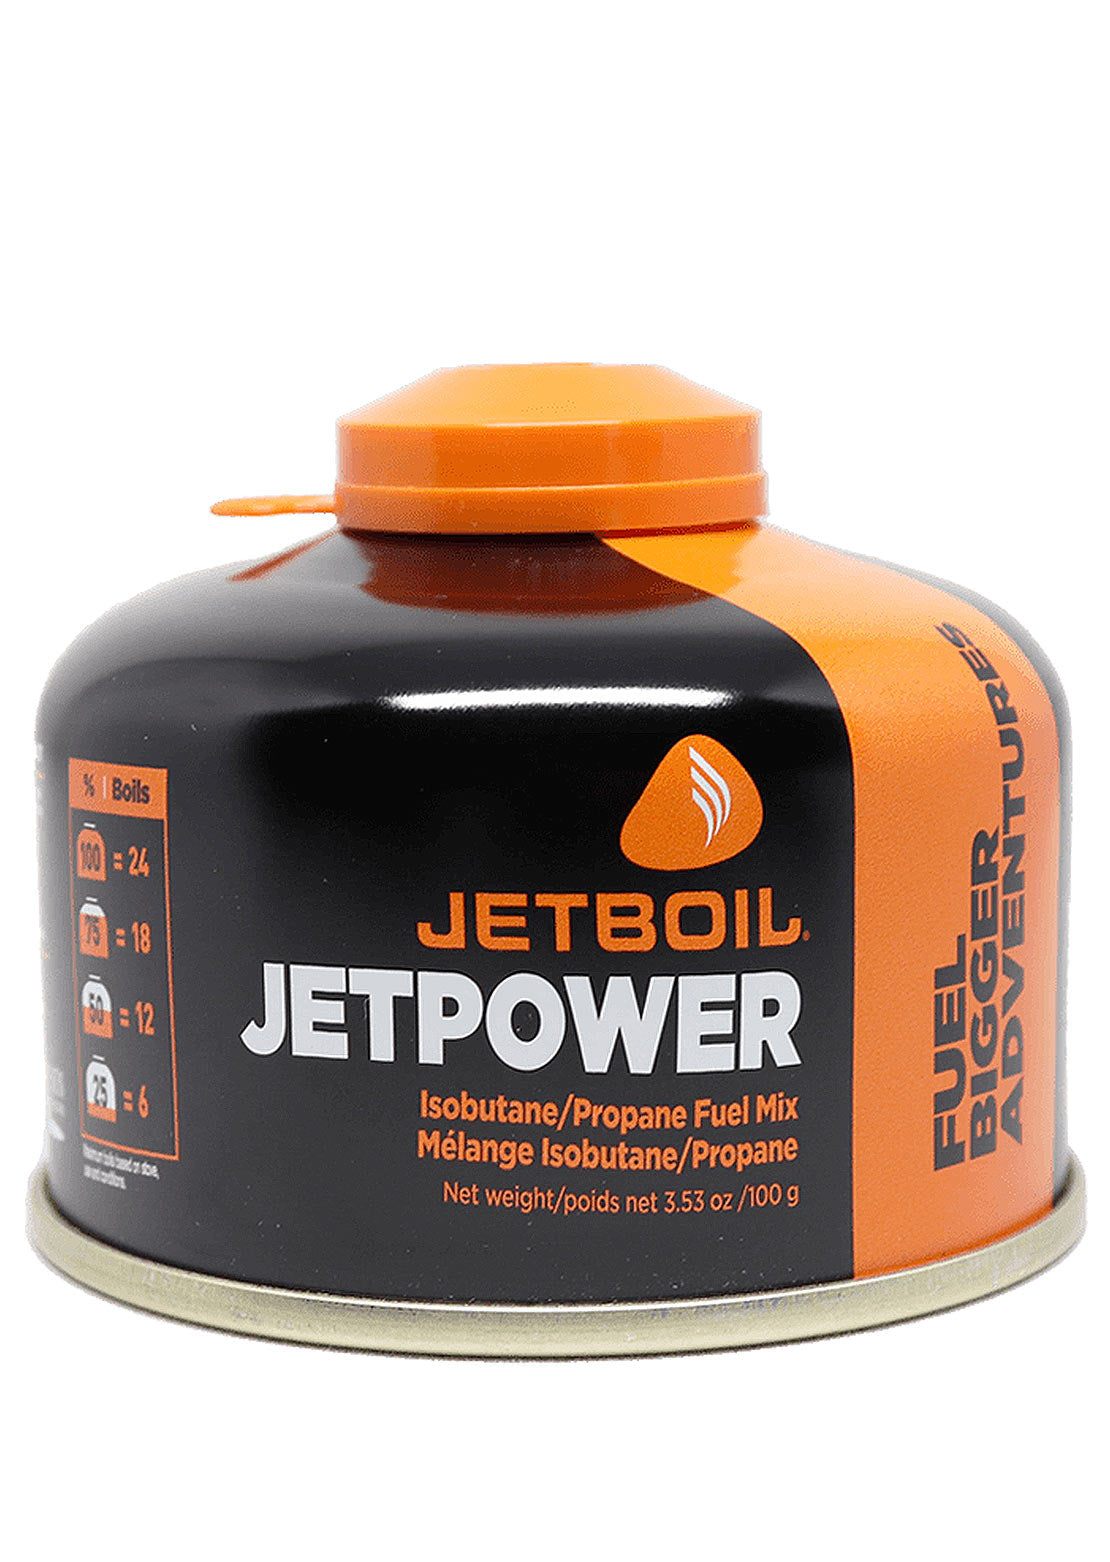 Jetboil Jetpower Fuel - 230gm